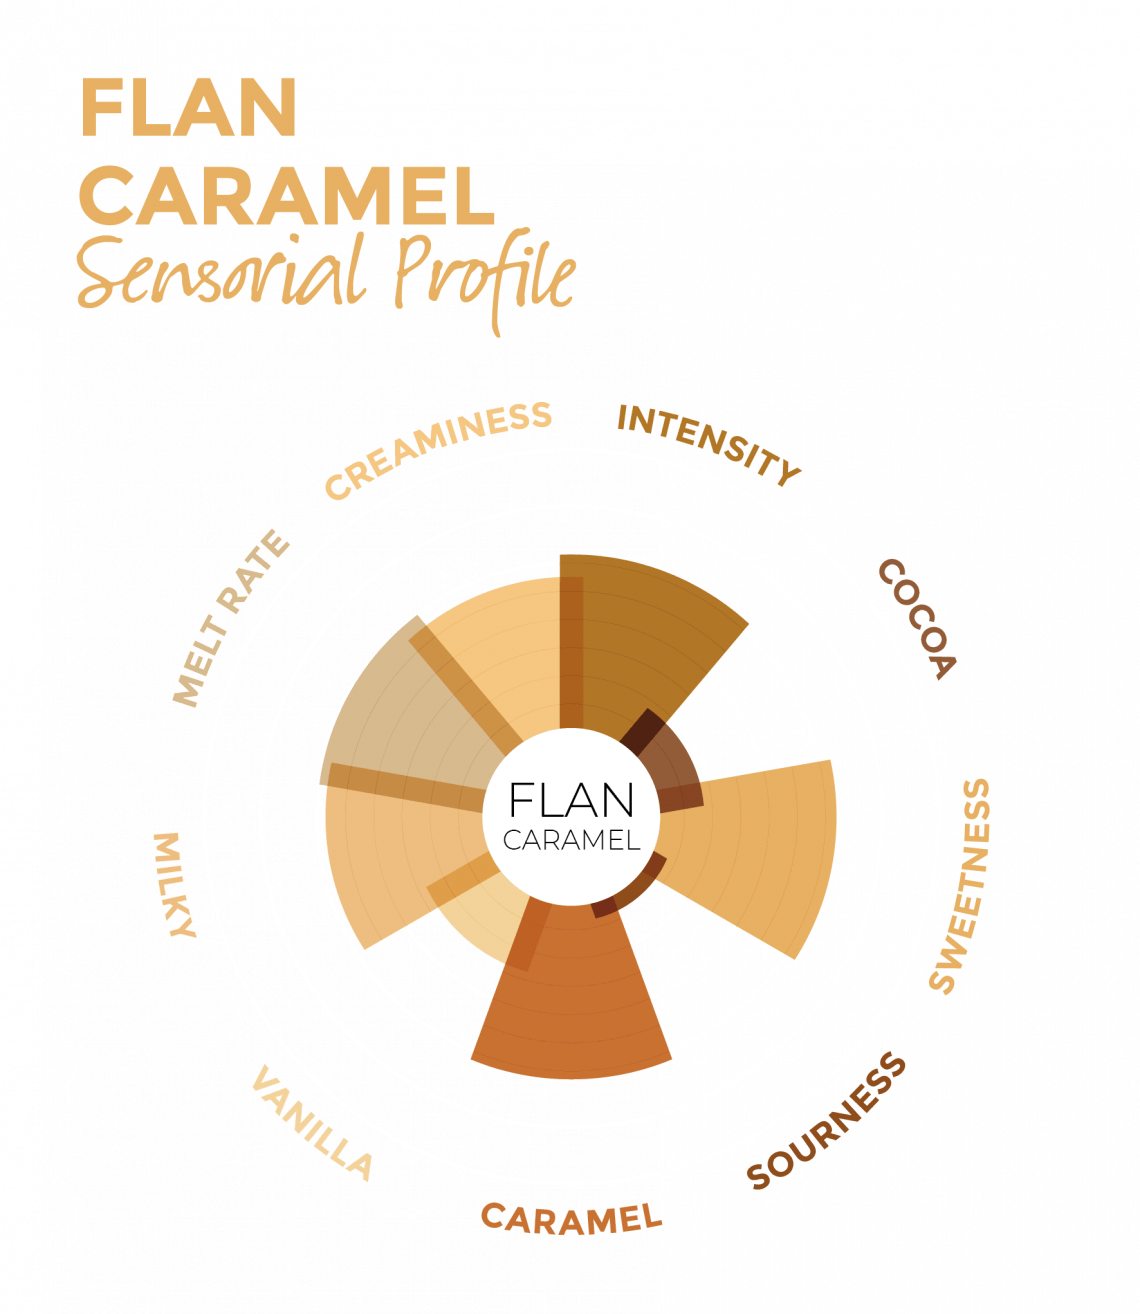 Flan Caramel sensory profile